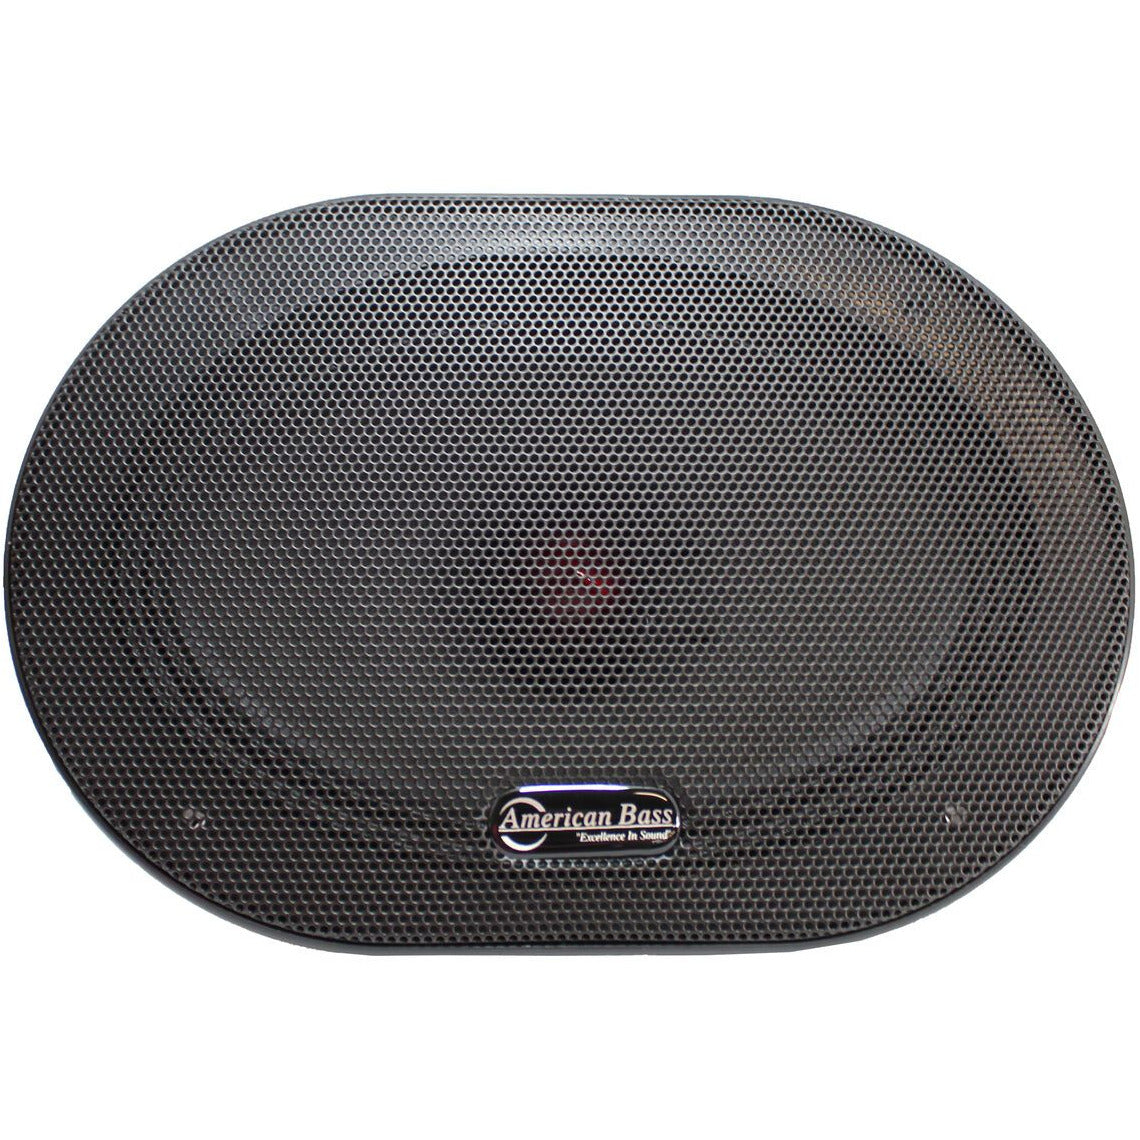 American Bass Godfather6.9 6x9" Midrange Loudspeaker 400 Watts 4-Ohm (Pair)